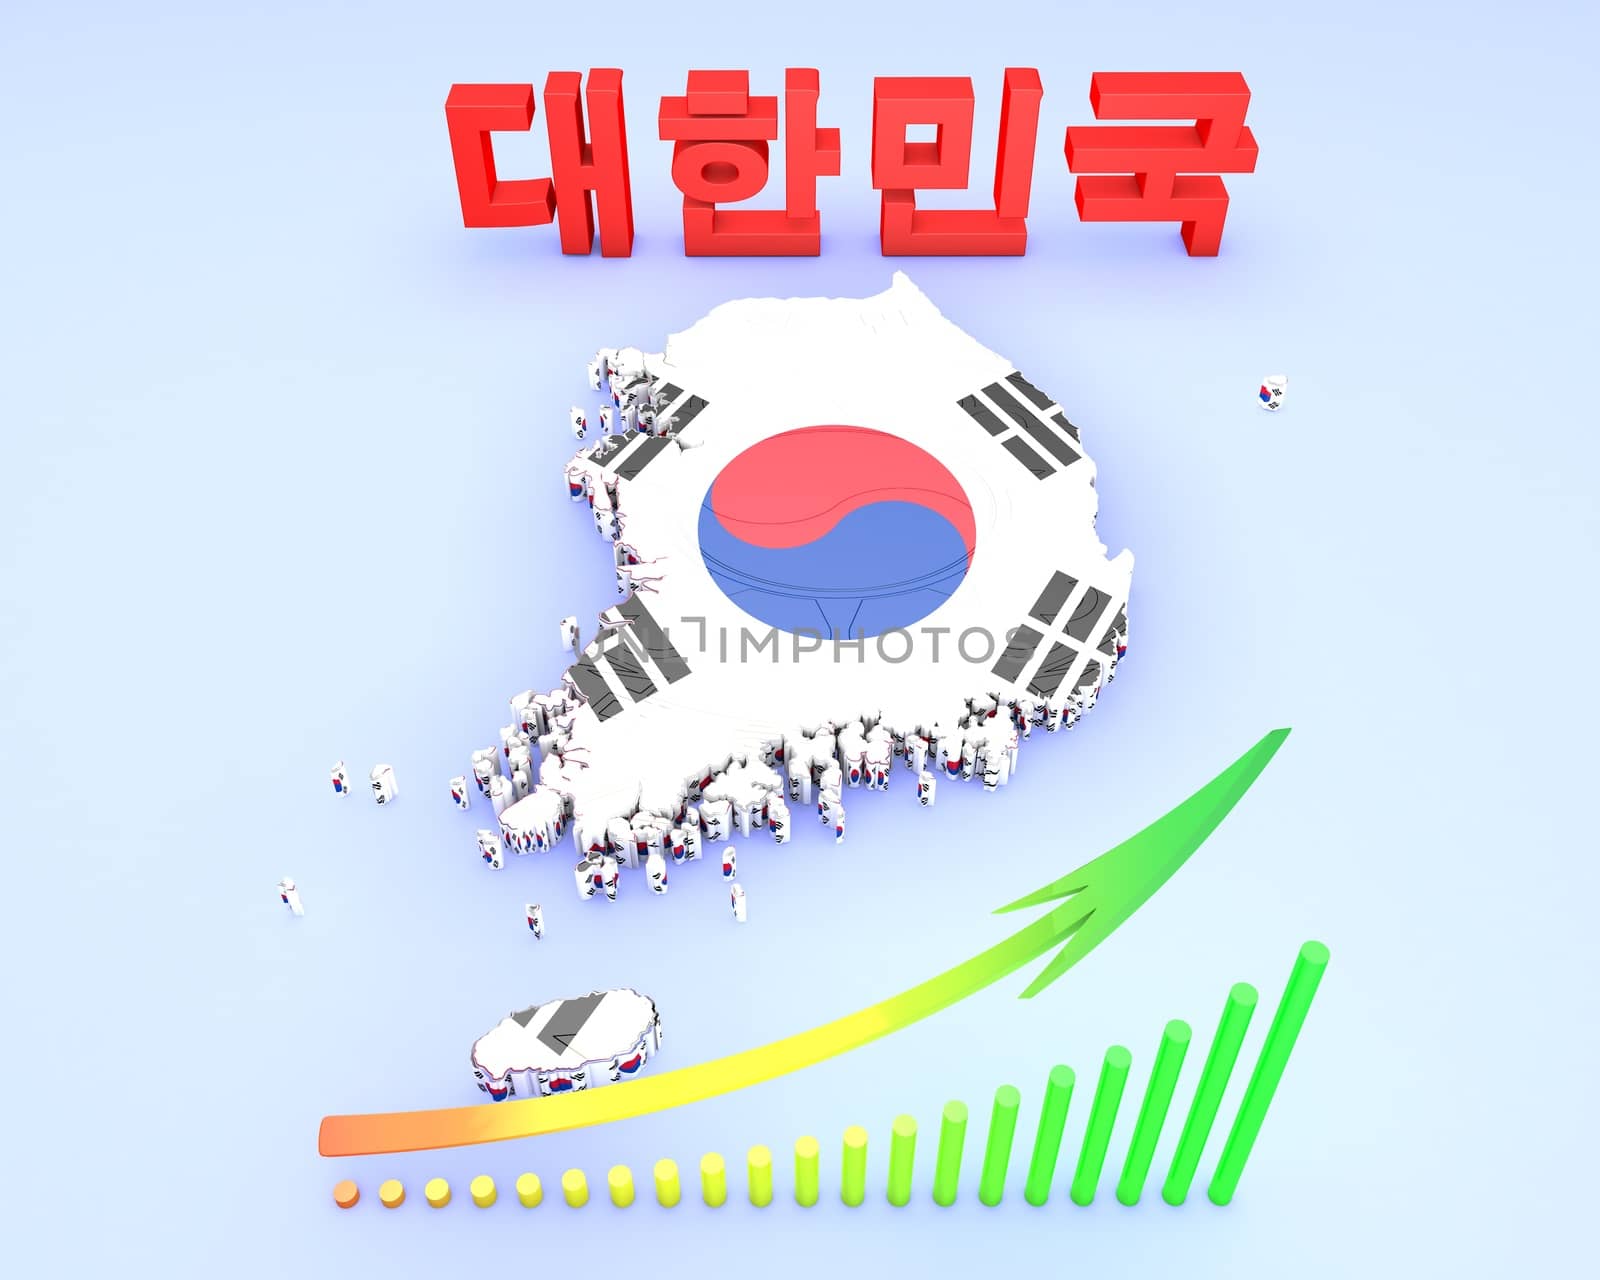 Map illustration of South Korea by dolfinvik